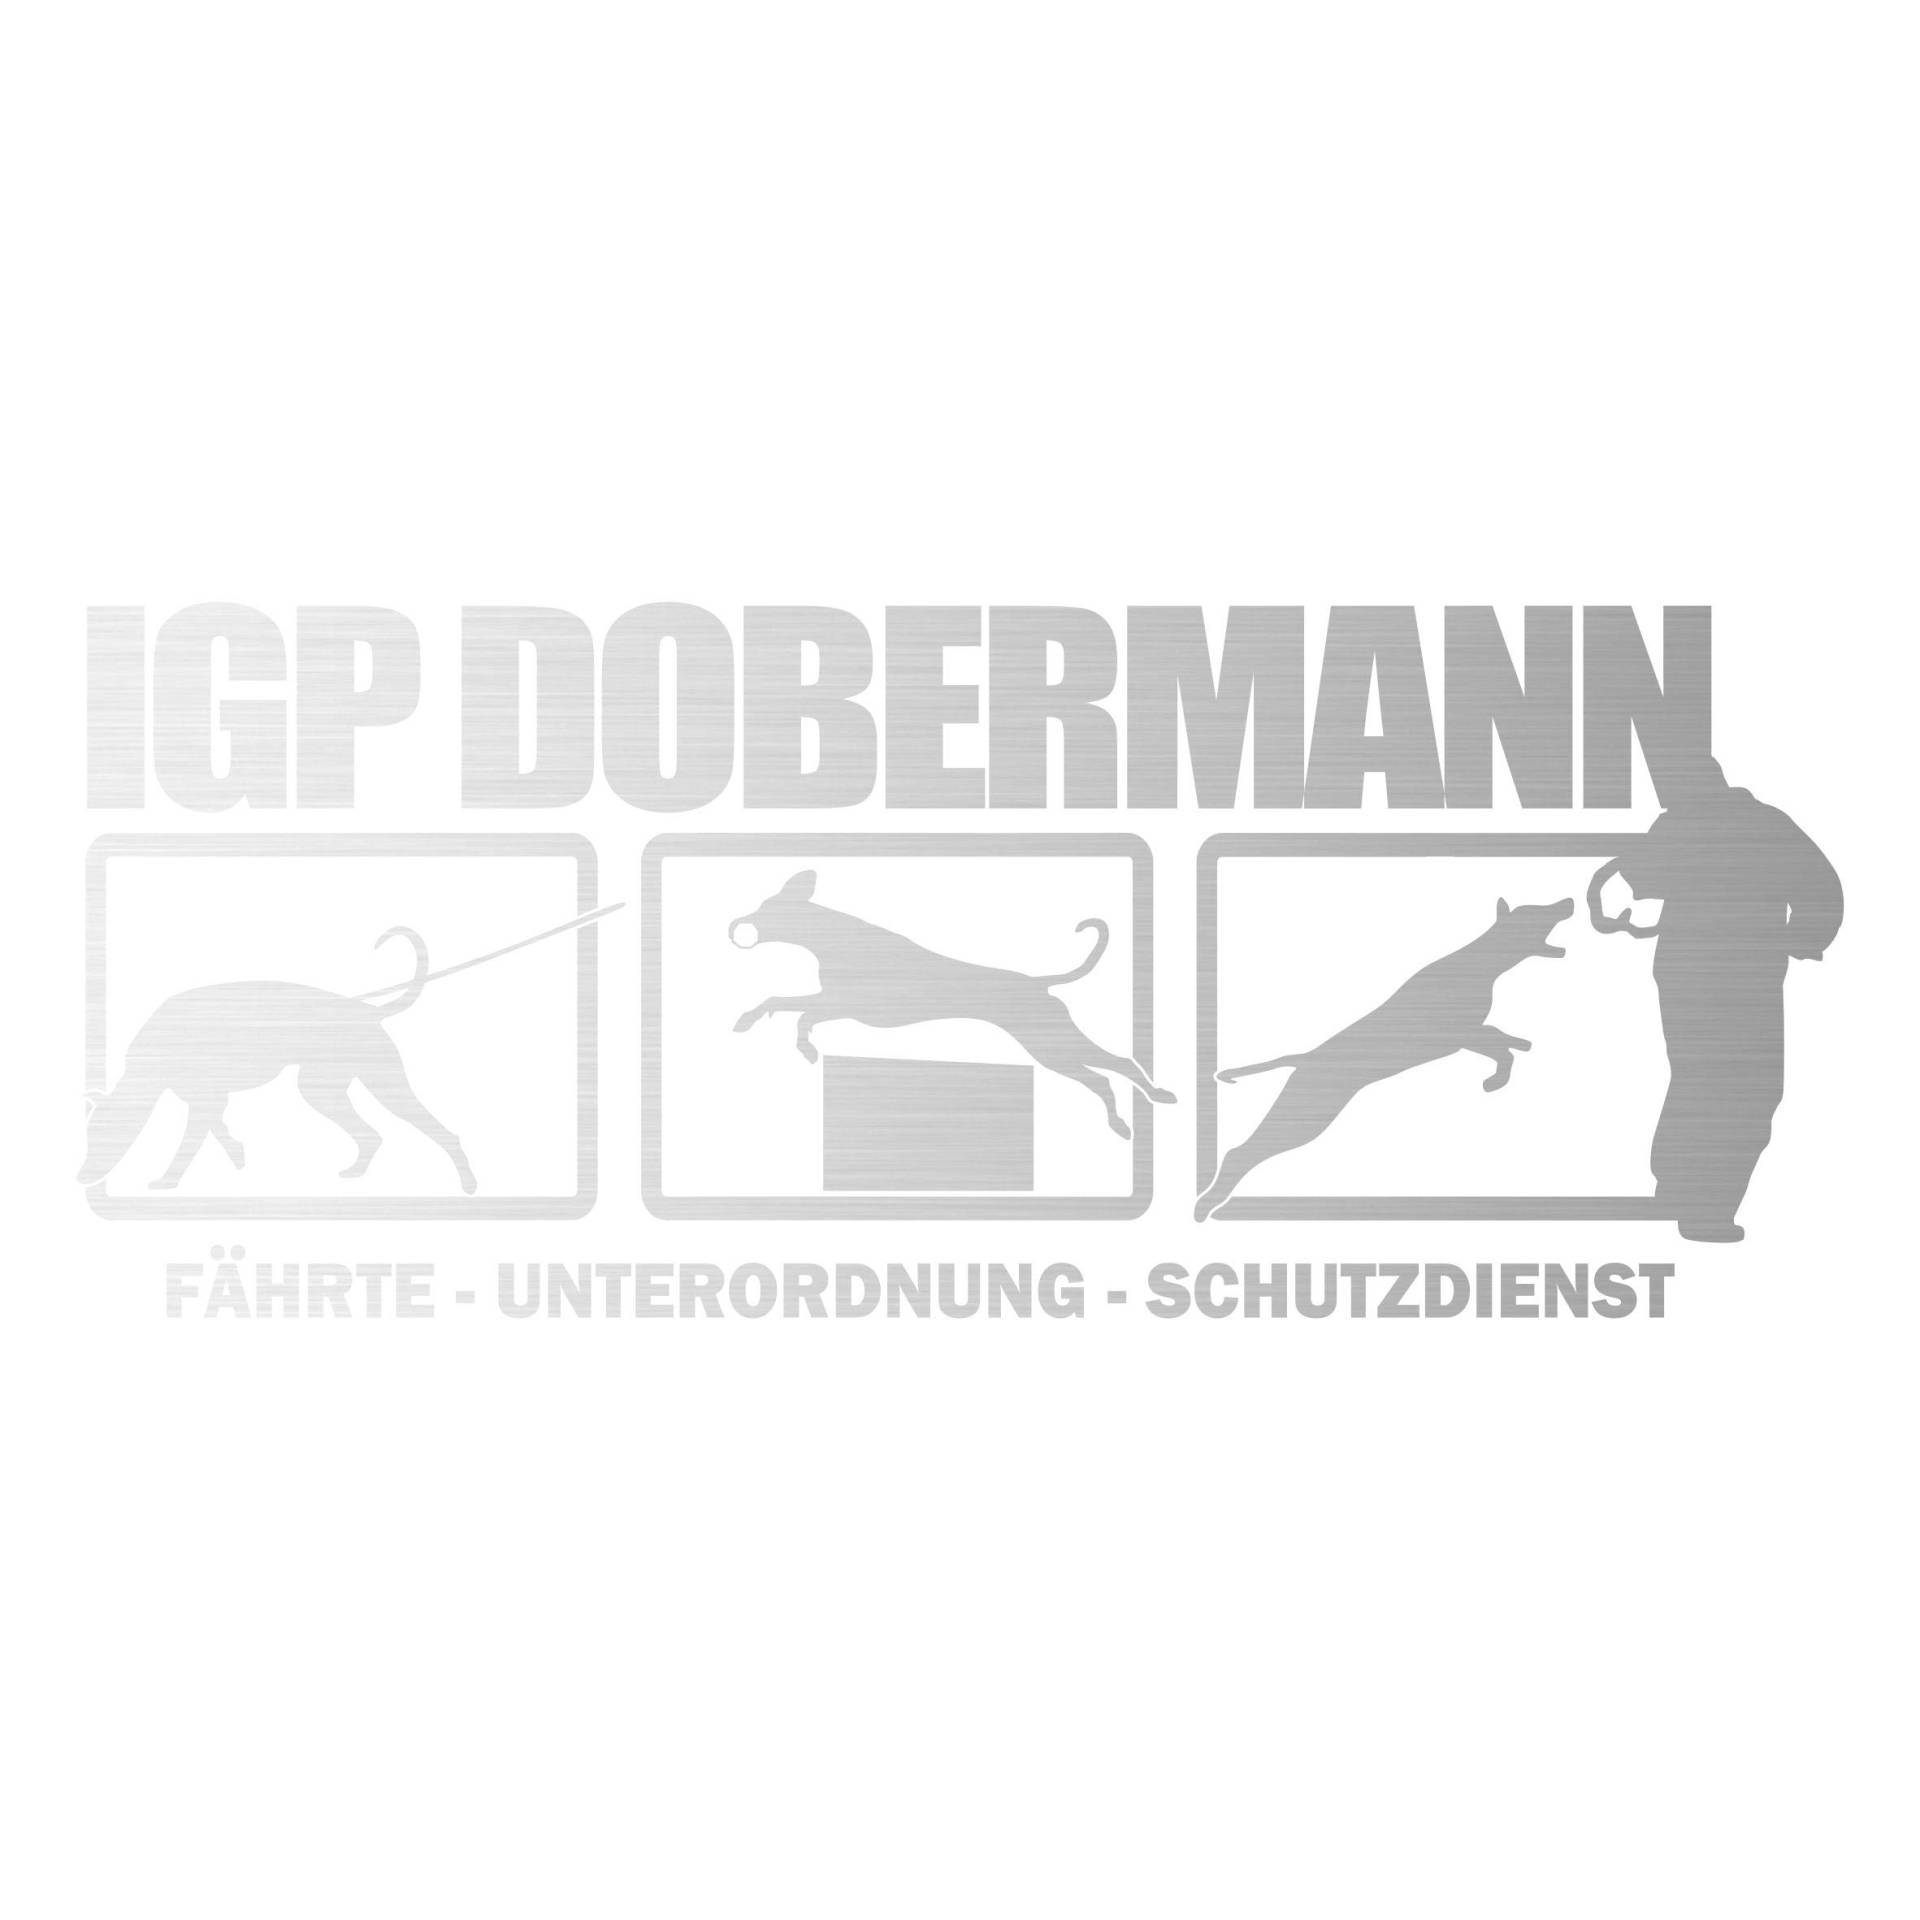 Auto Aufkleber IGP HS Dobermann UNKUPIERT Dobi Autoaufkleber K9 Hundeanhänger ehemals IPO Hundesport Hundemotiv Silber von siviwonder